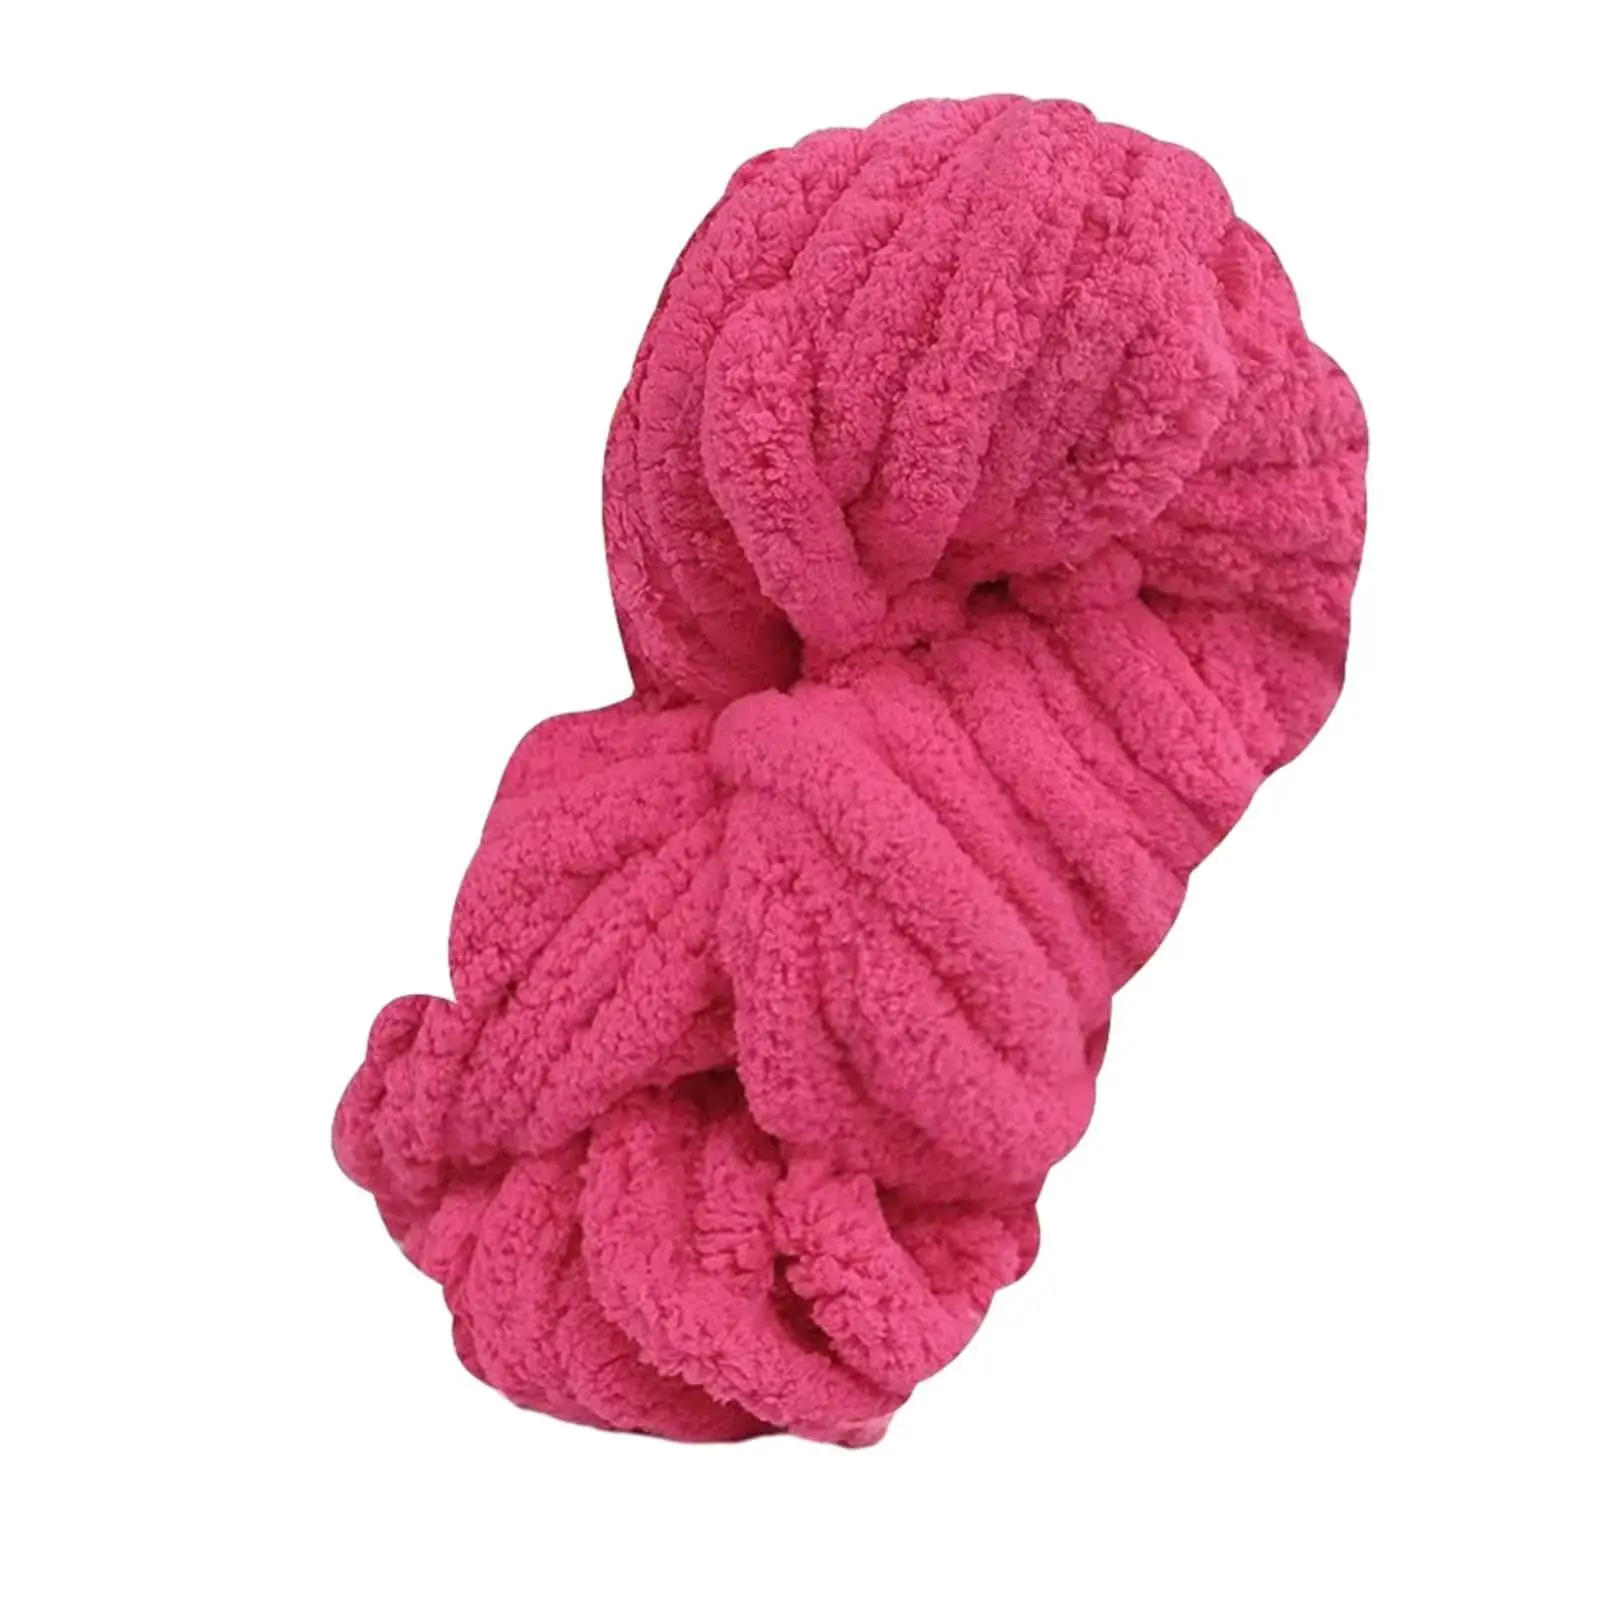 Chunky Wool Yarn Bulky Giant Wool Yarn Weight Yarn for Pillow Sweaters Hats